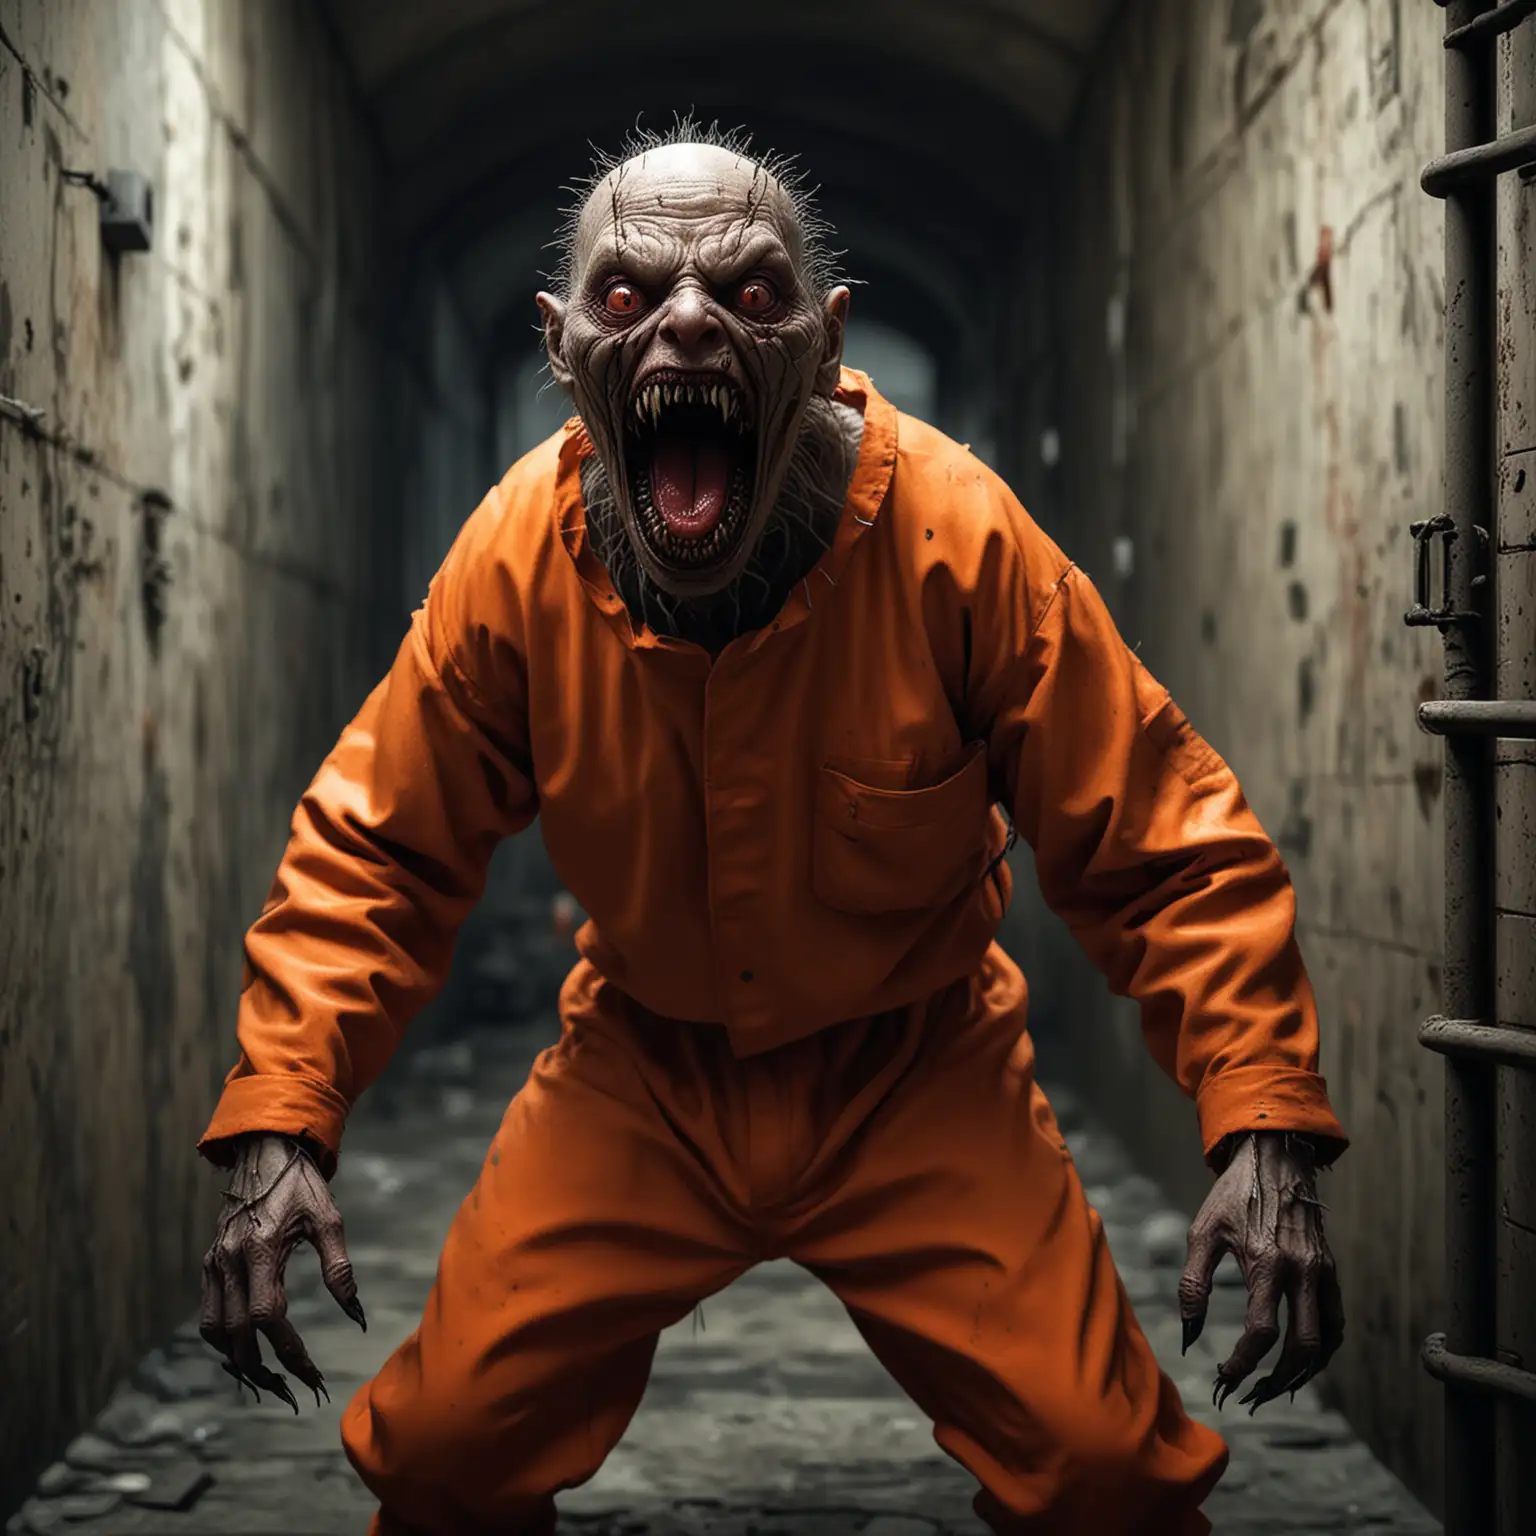 Hyper Realistic Horror Terrifying Creature in Orange Prisoners Clothing